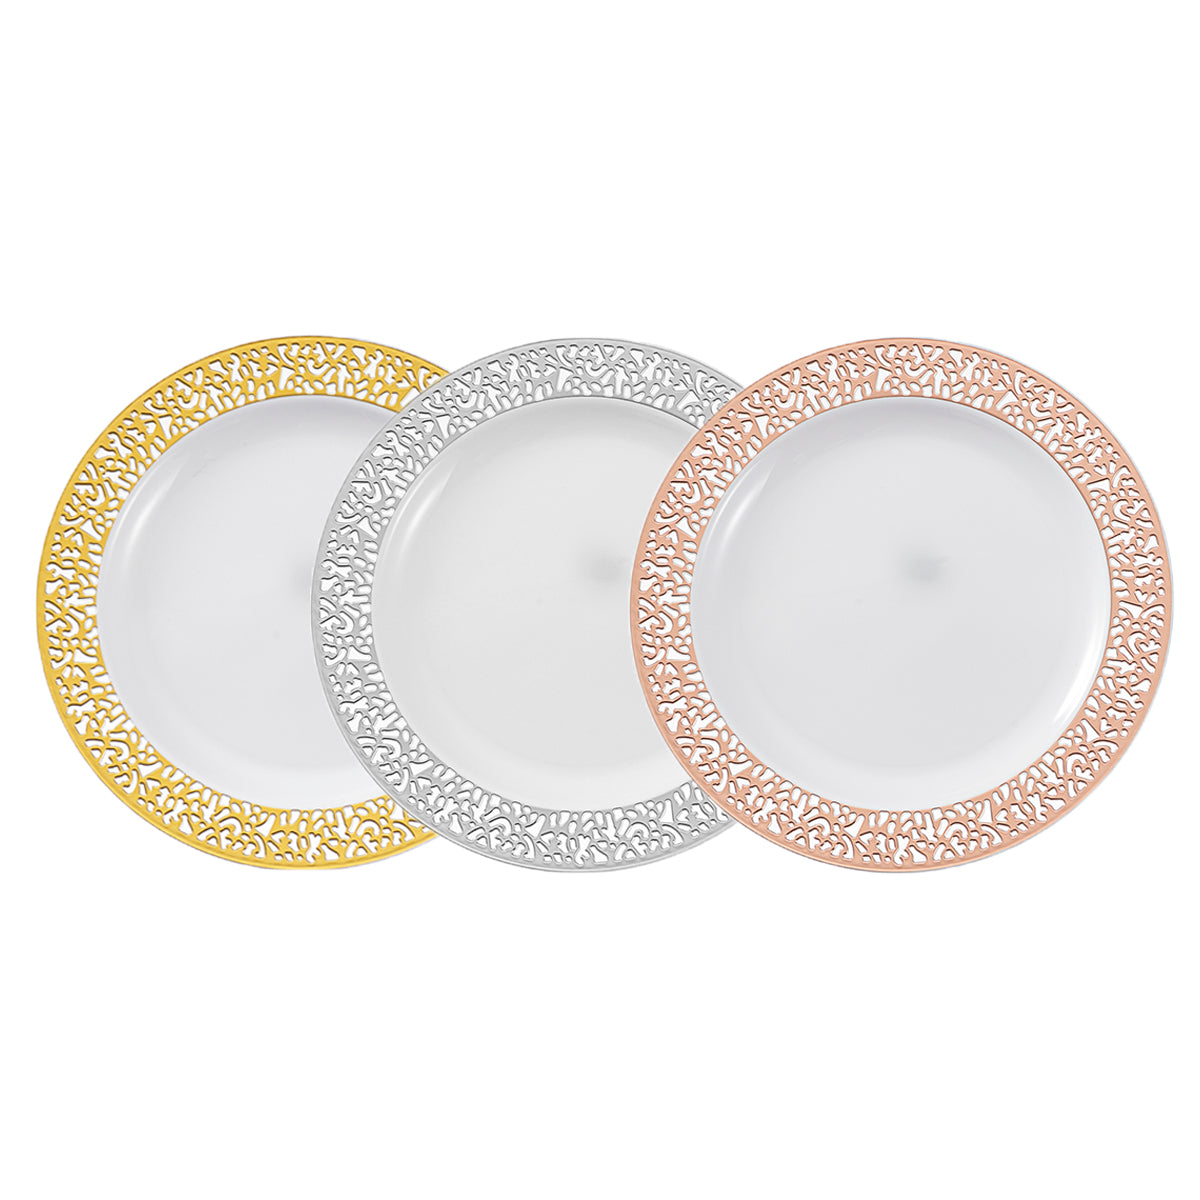 6Pcs/set Disposable Plastic Dessert Plates Hollow Edge Wedding Party Plastic Plates Salad Plates For Holiday Party